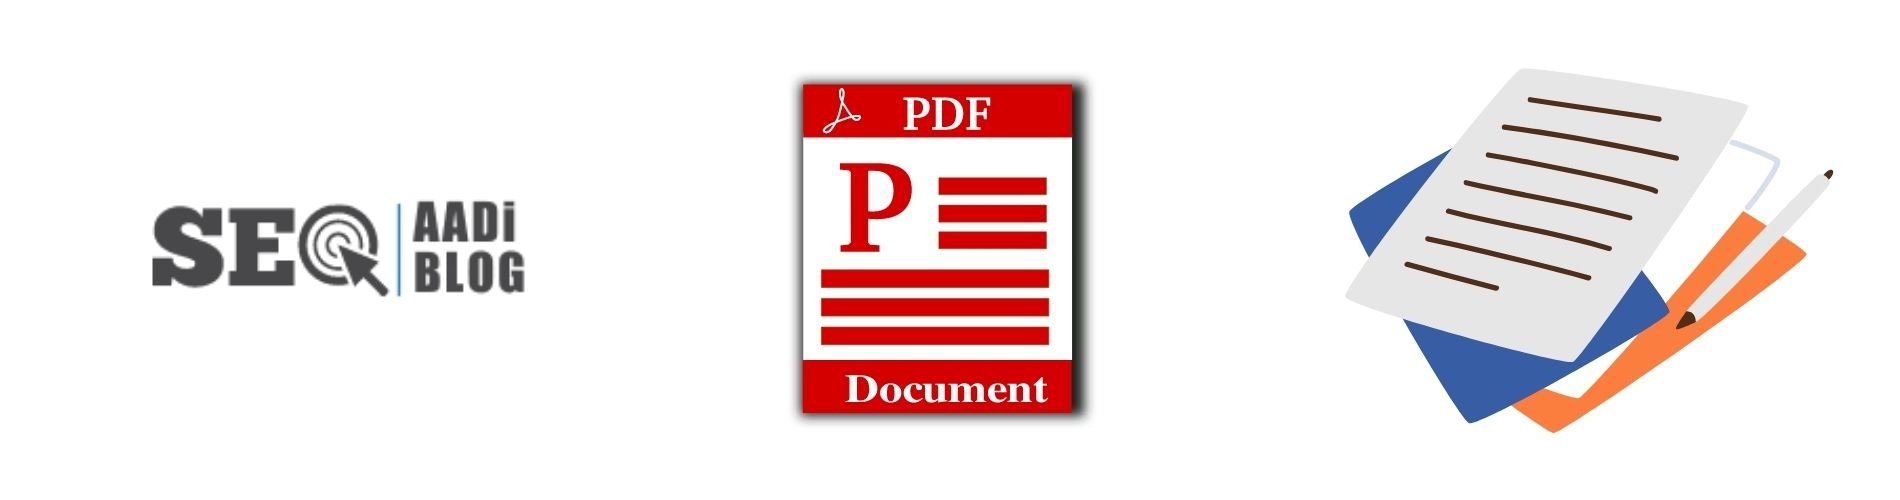 PDF submission sites